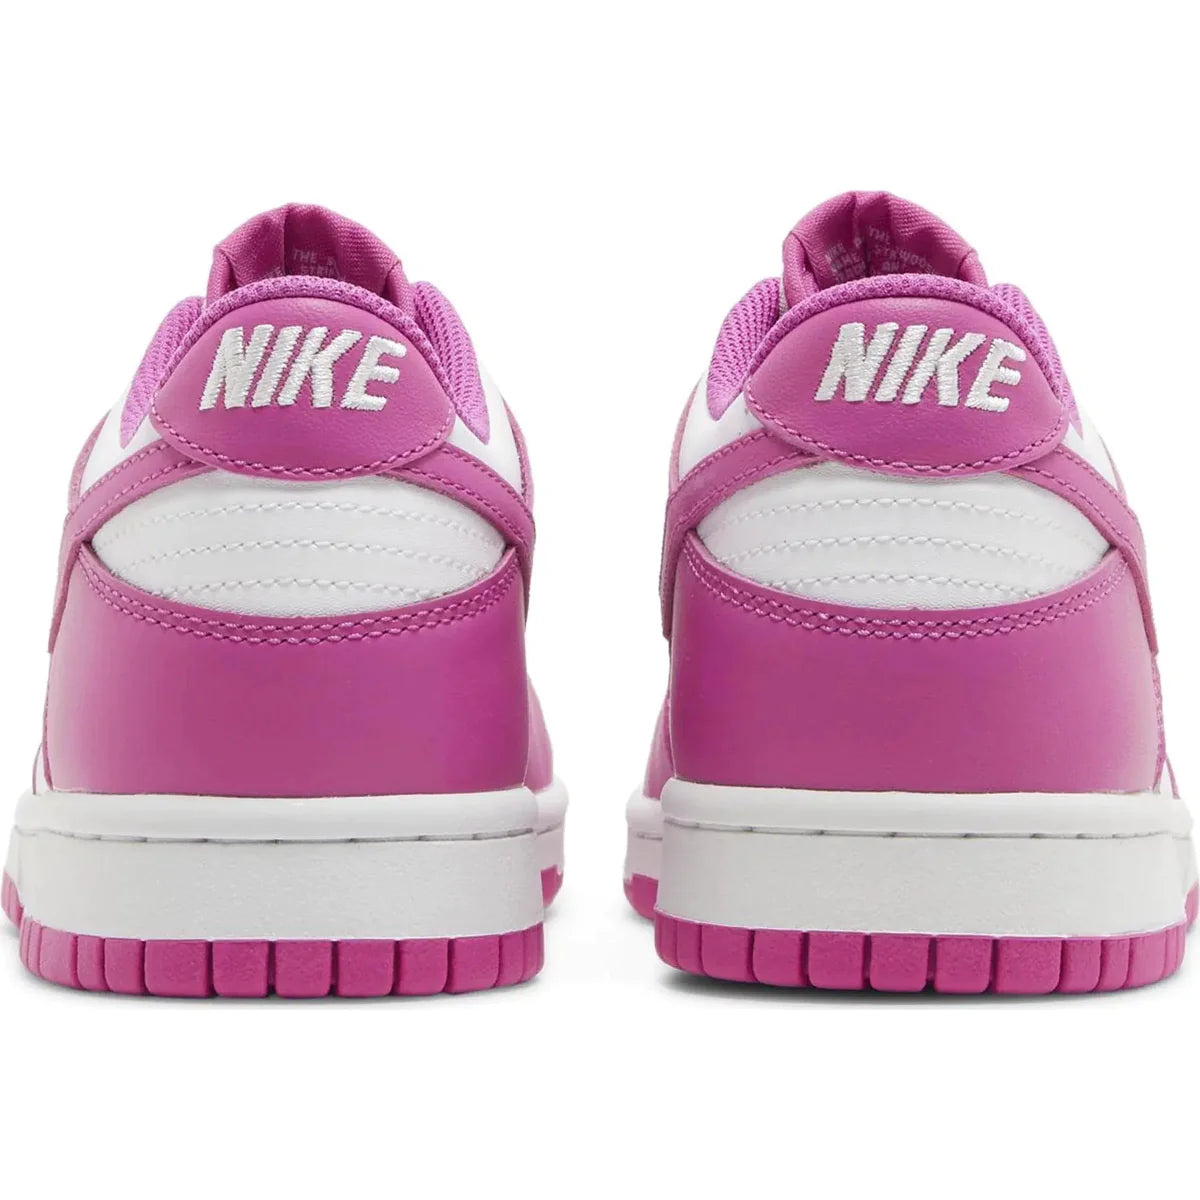 Nike Dunk Fuchsia Pink